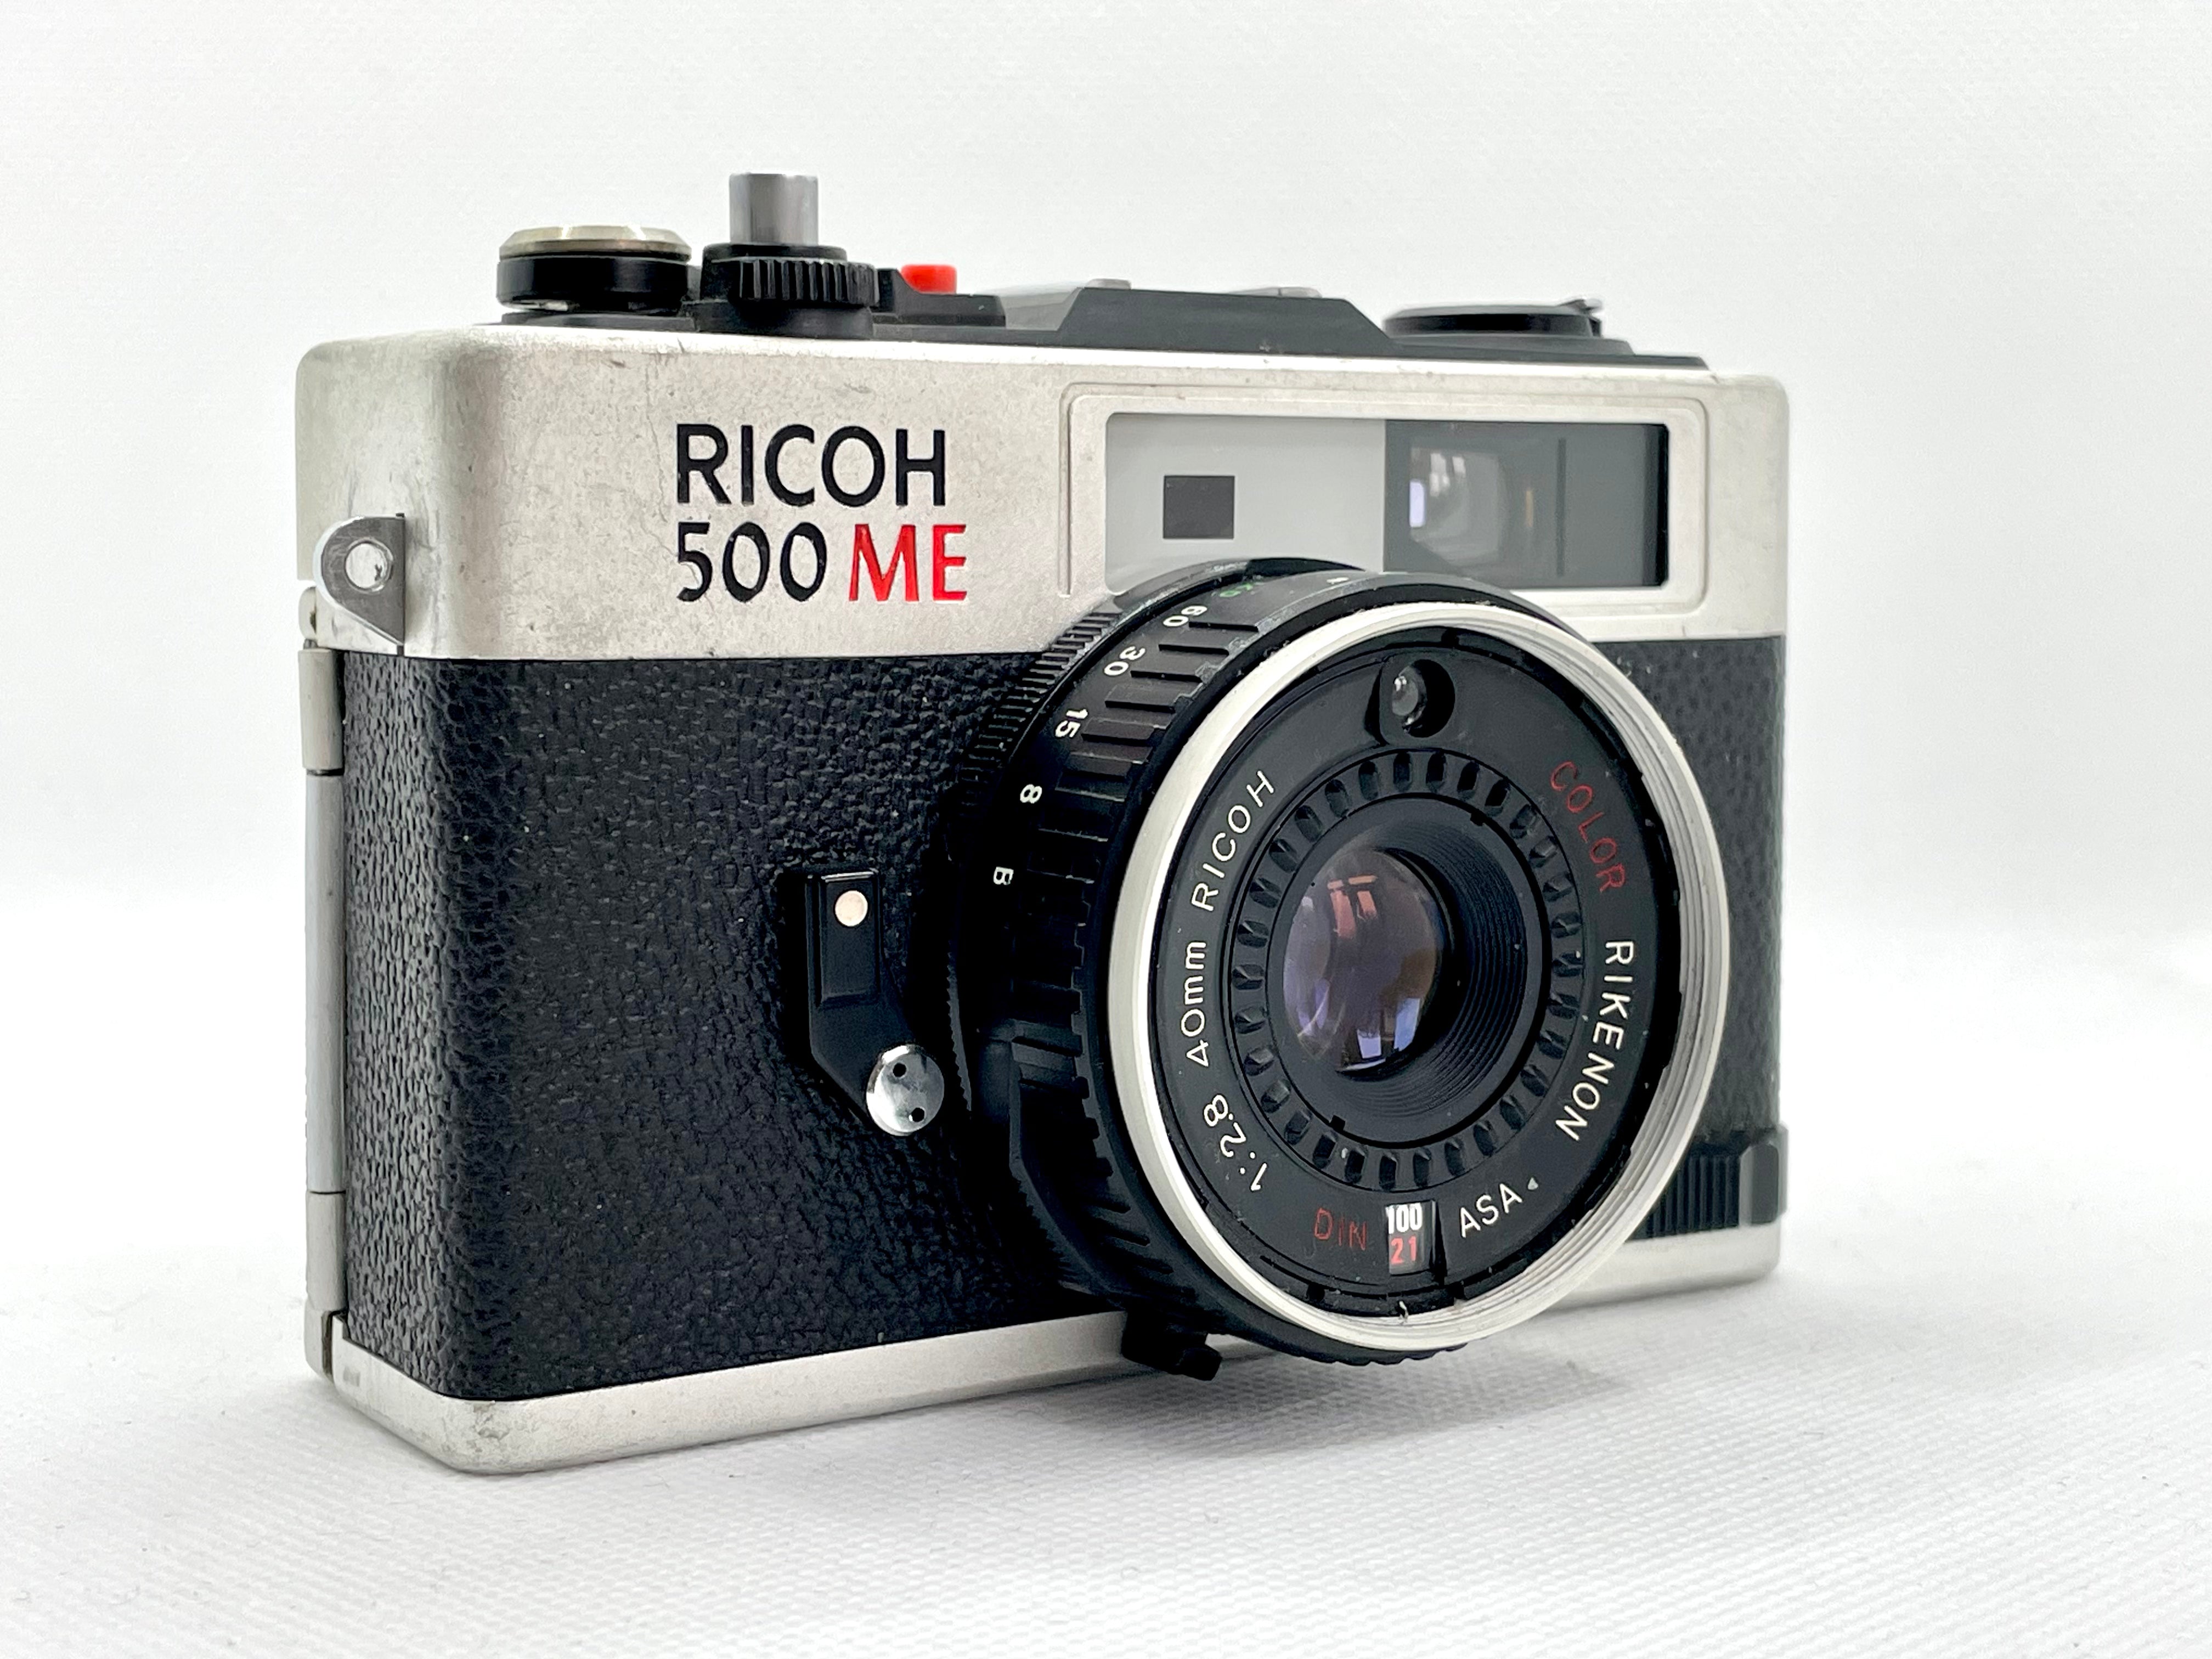 Ricoh 500ME